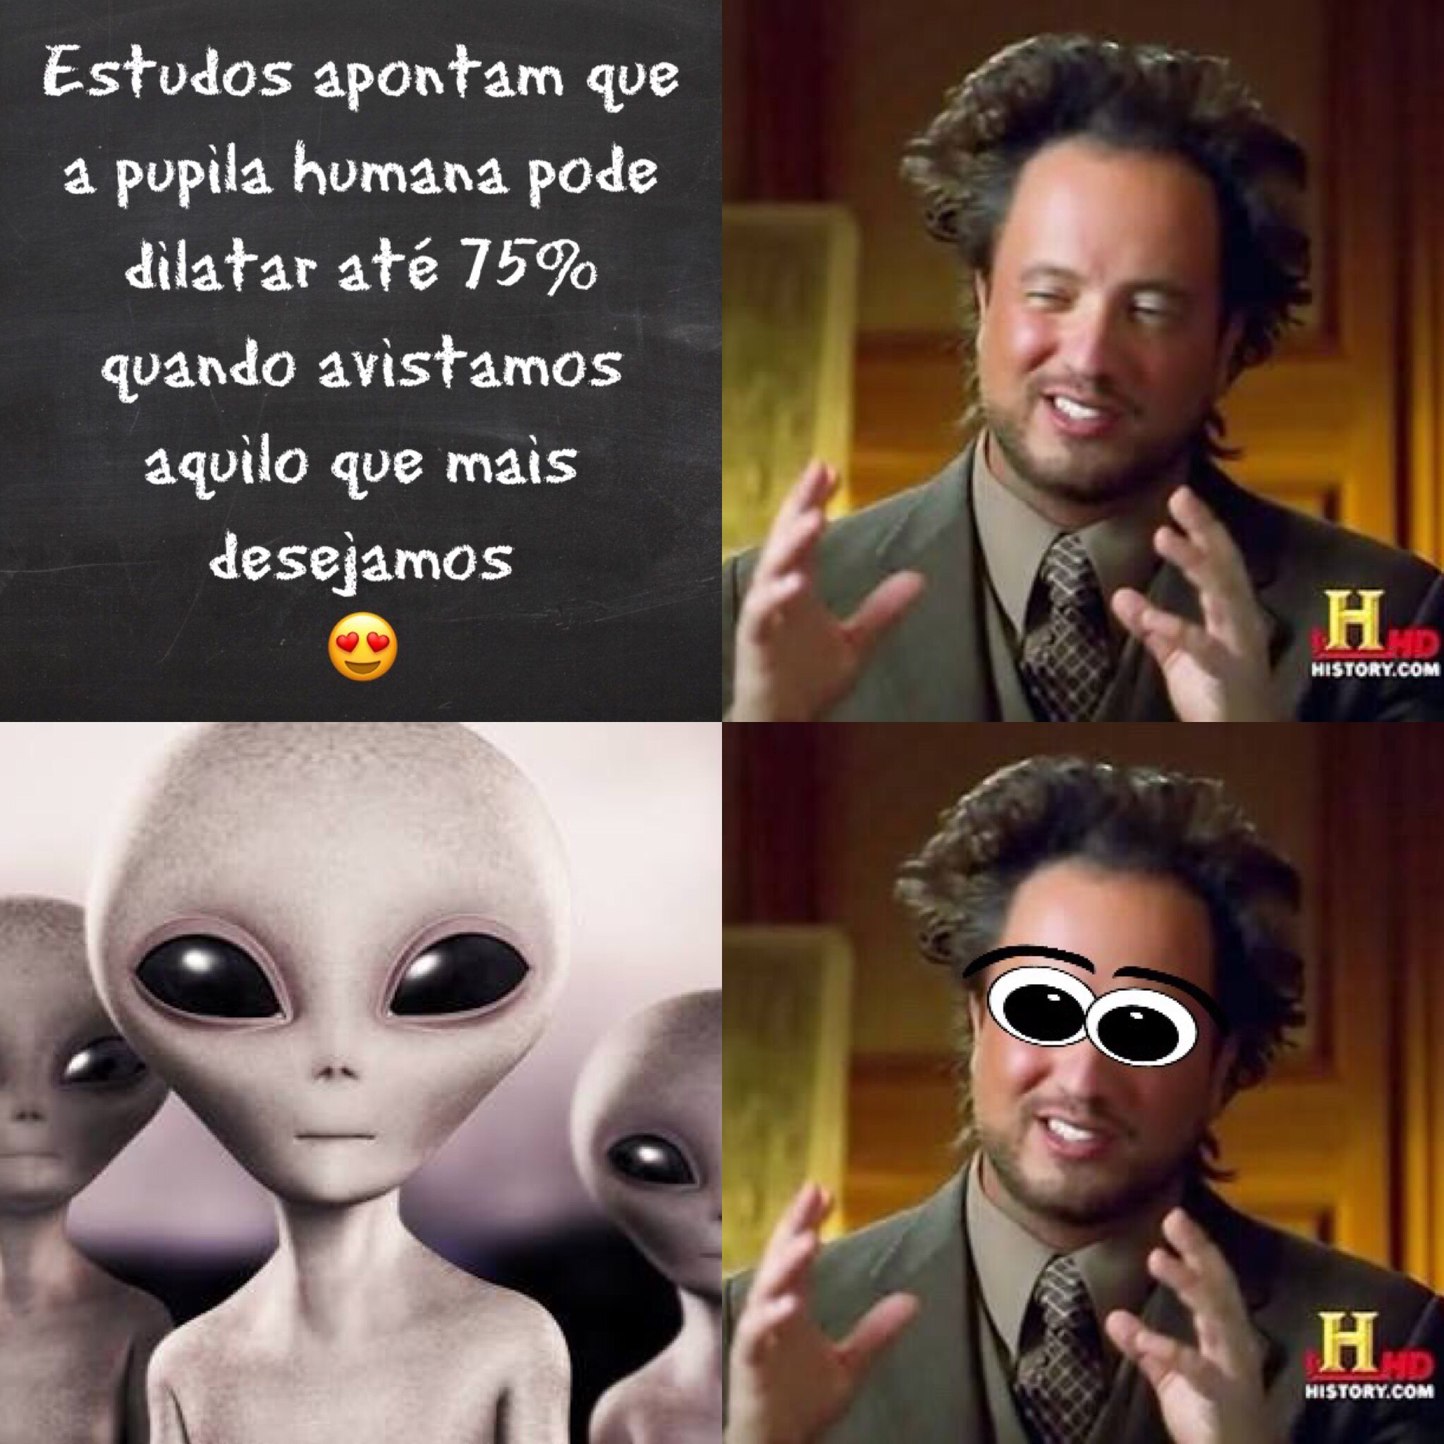 pupilas extraterrestres - meme